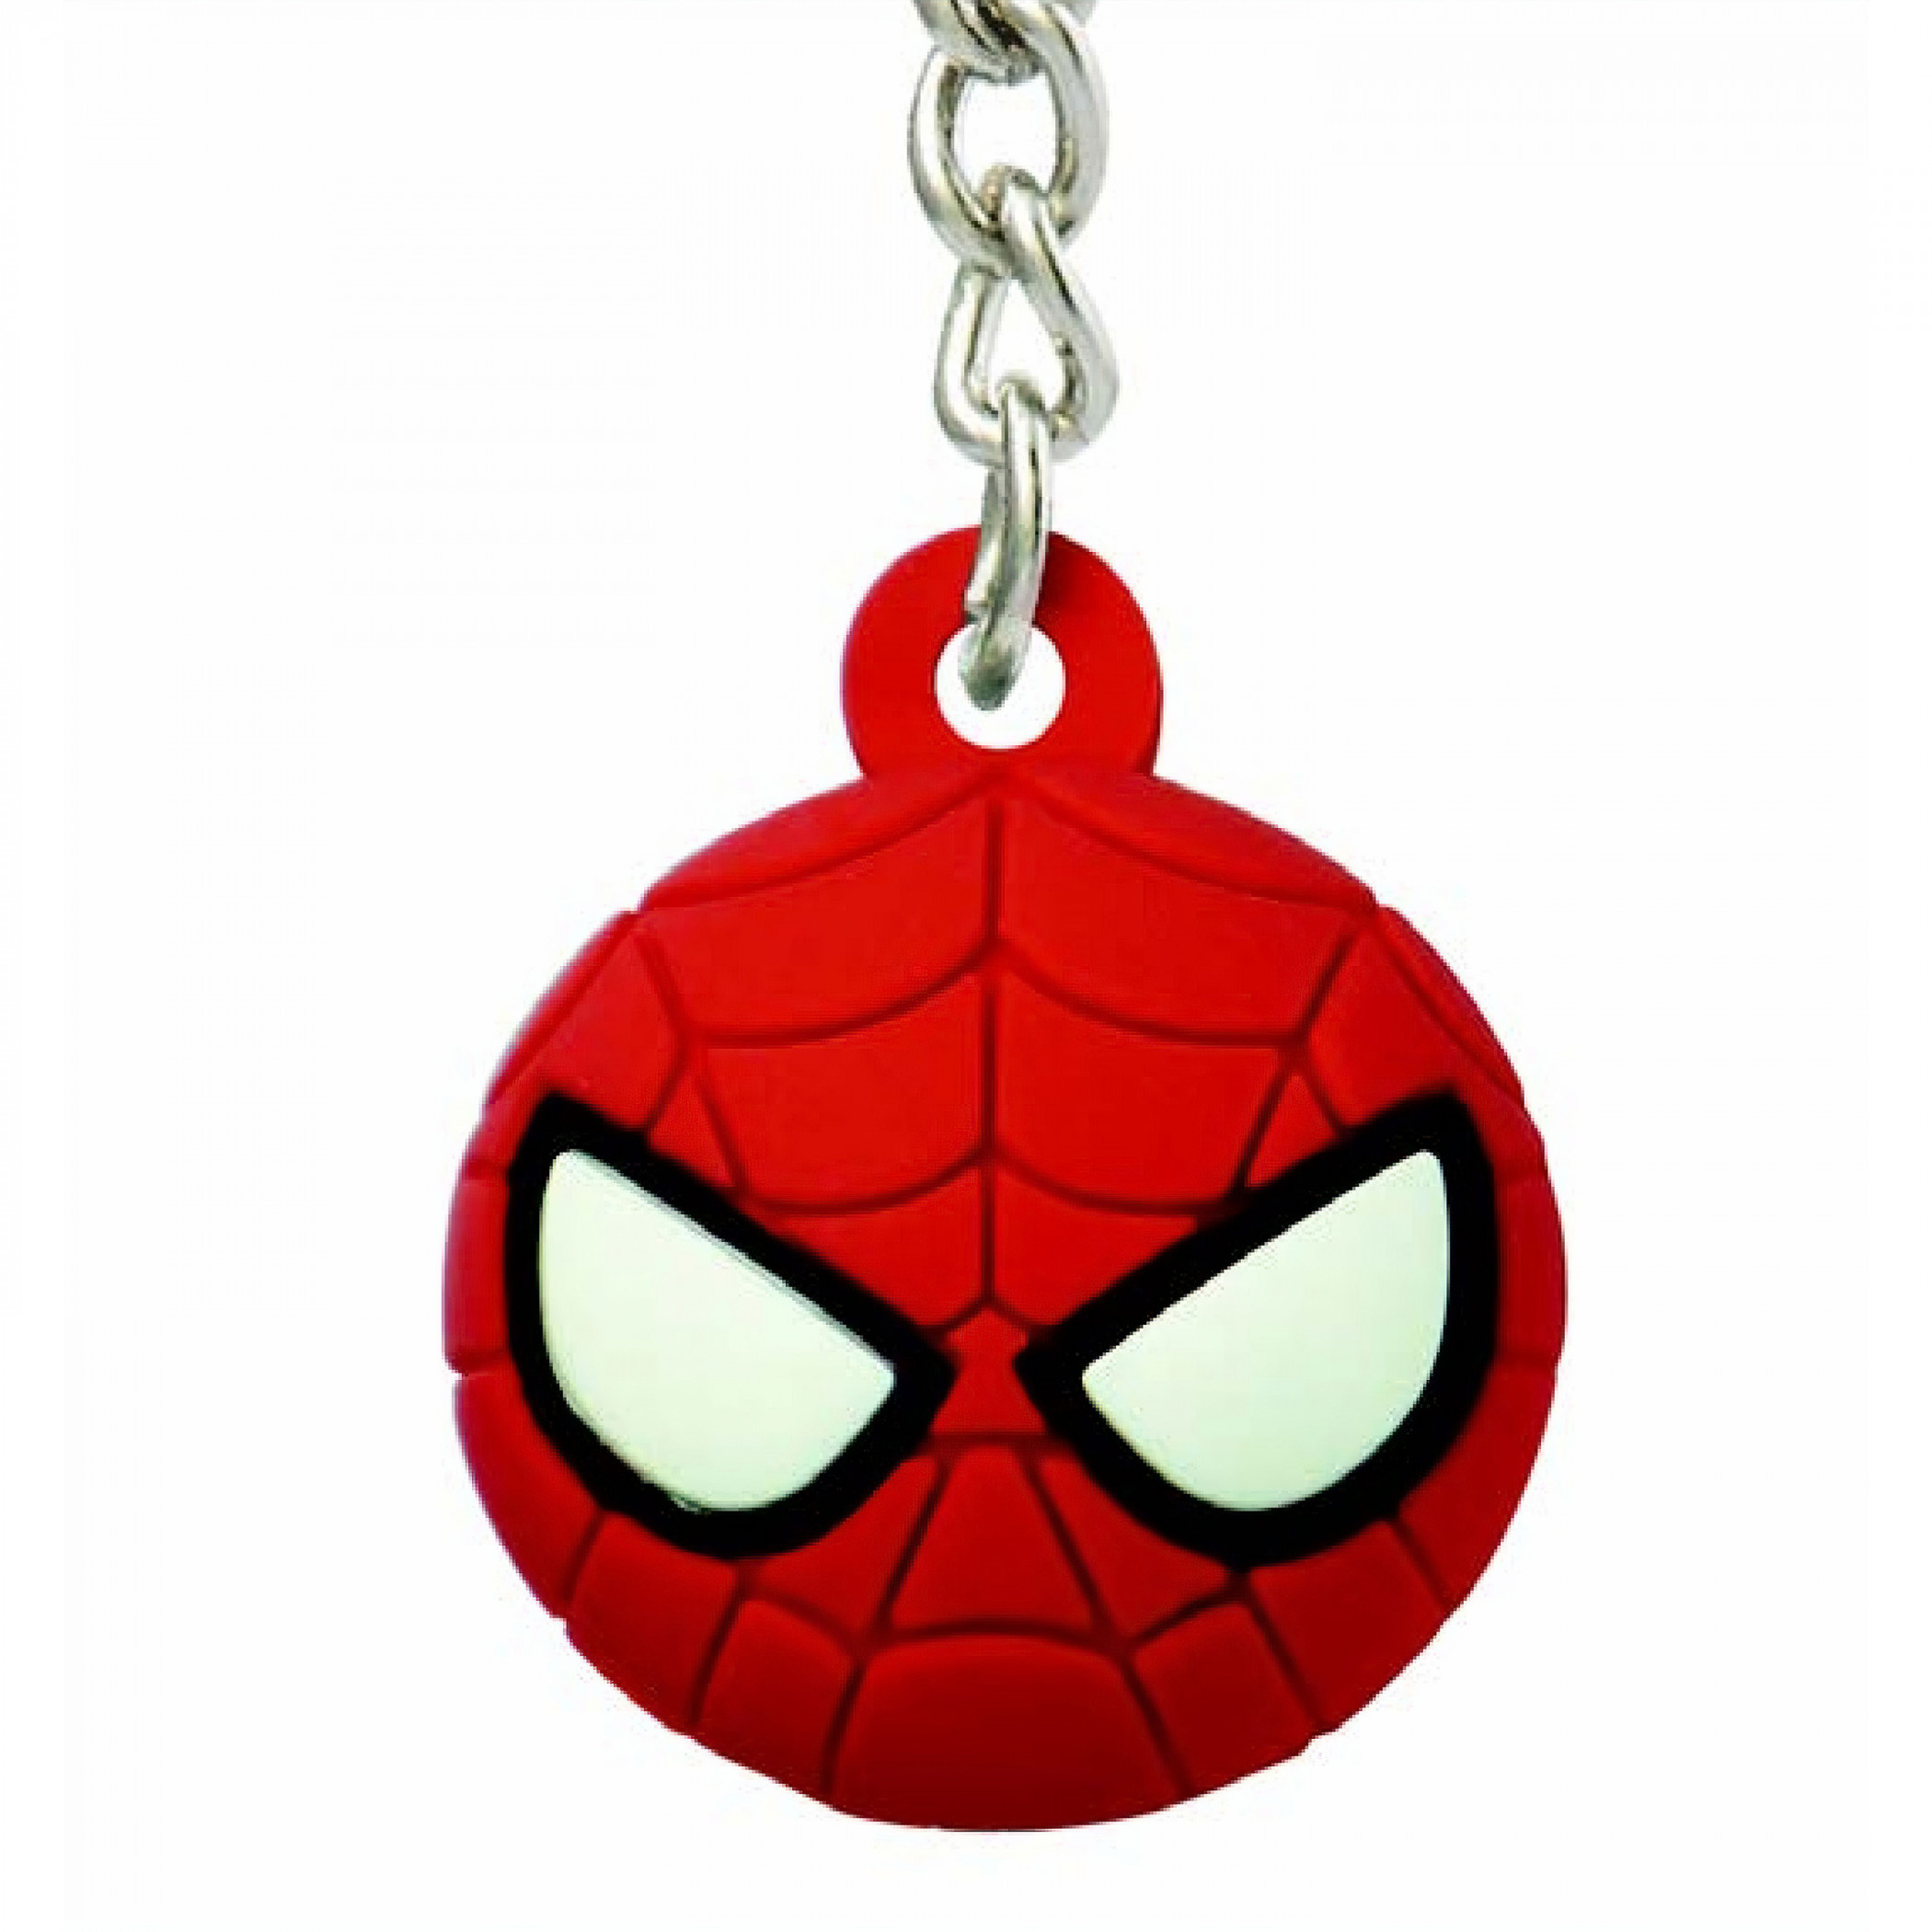 Spider-Man Mask 3D Foam Ball Keychain